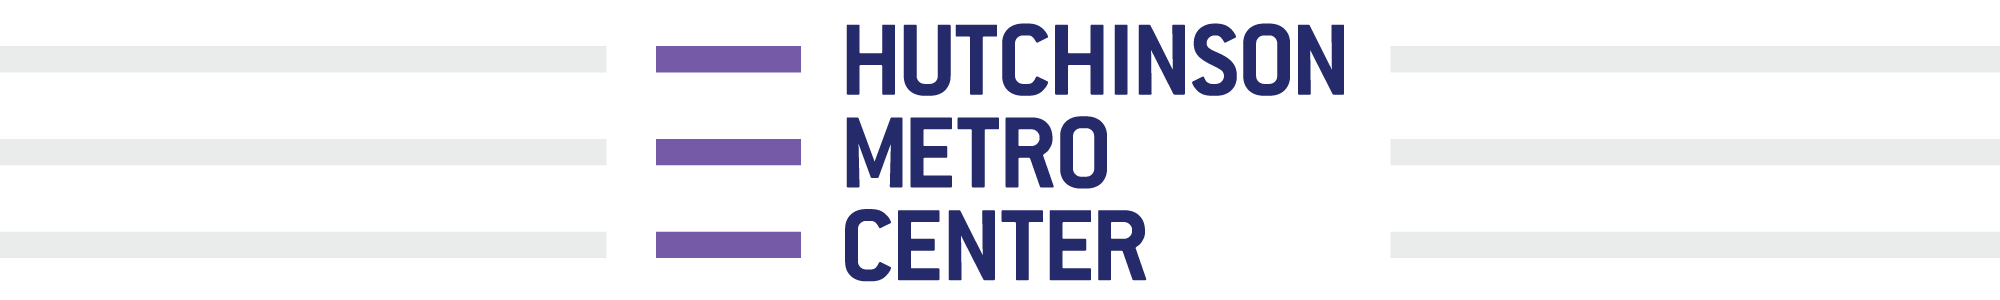 Hutchinson Metro Center